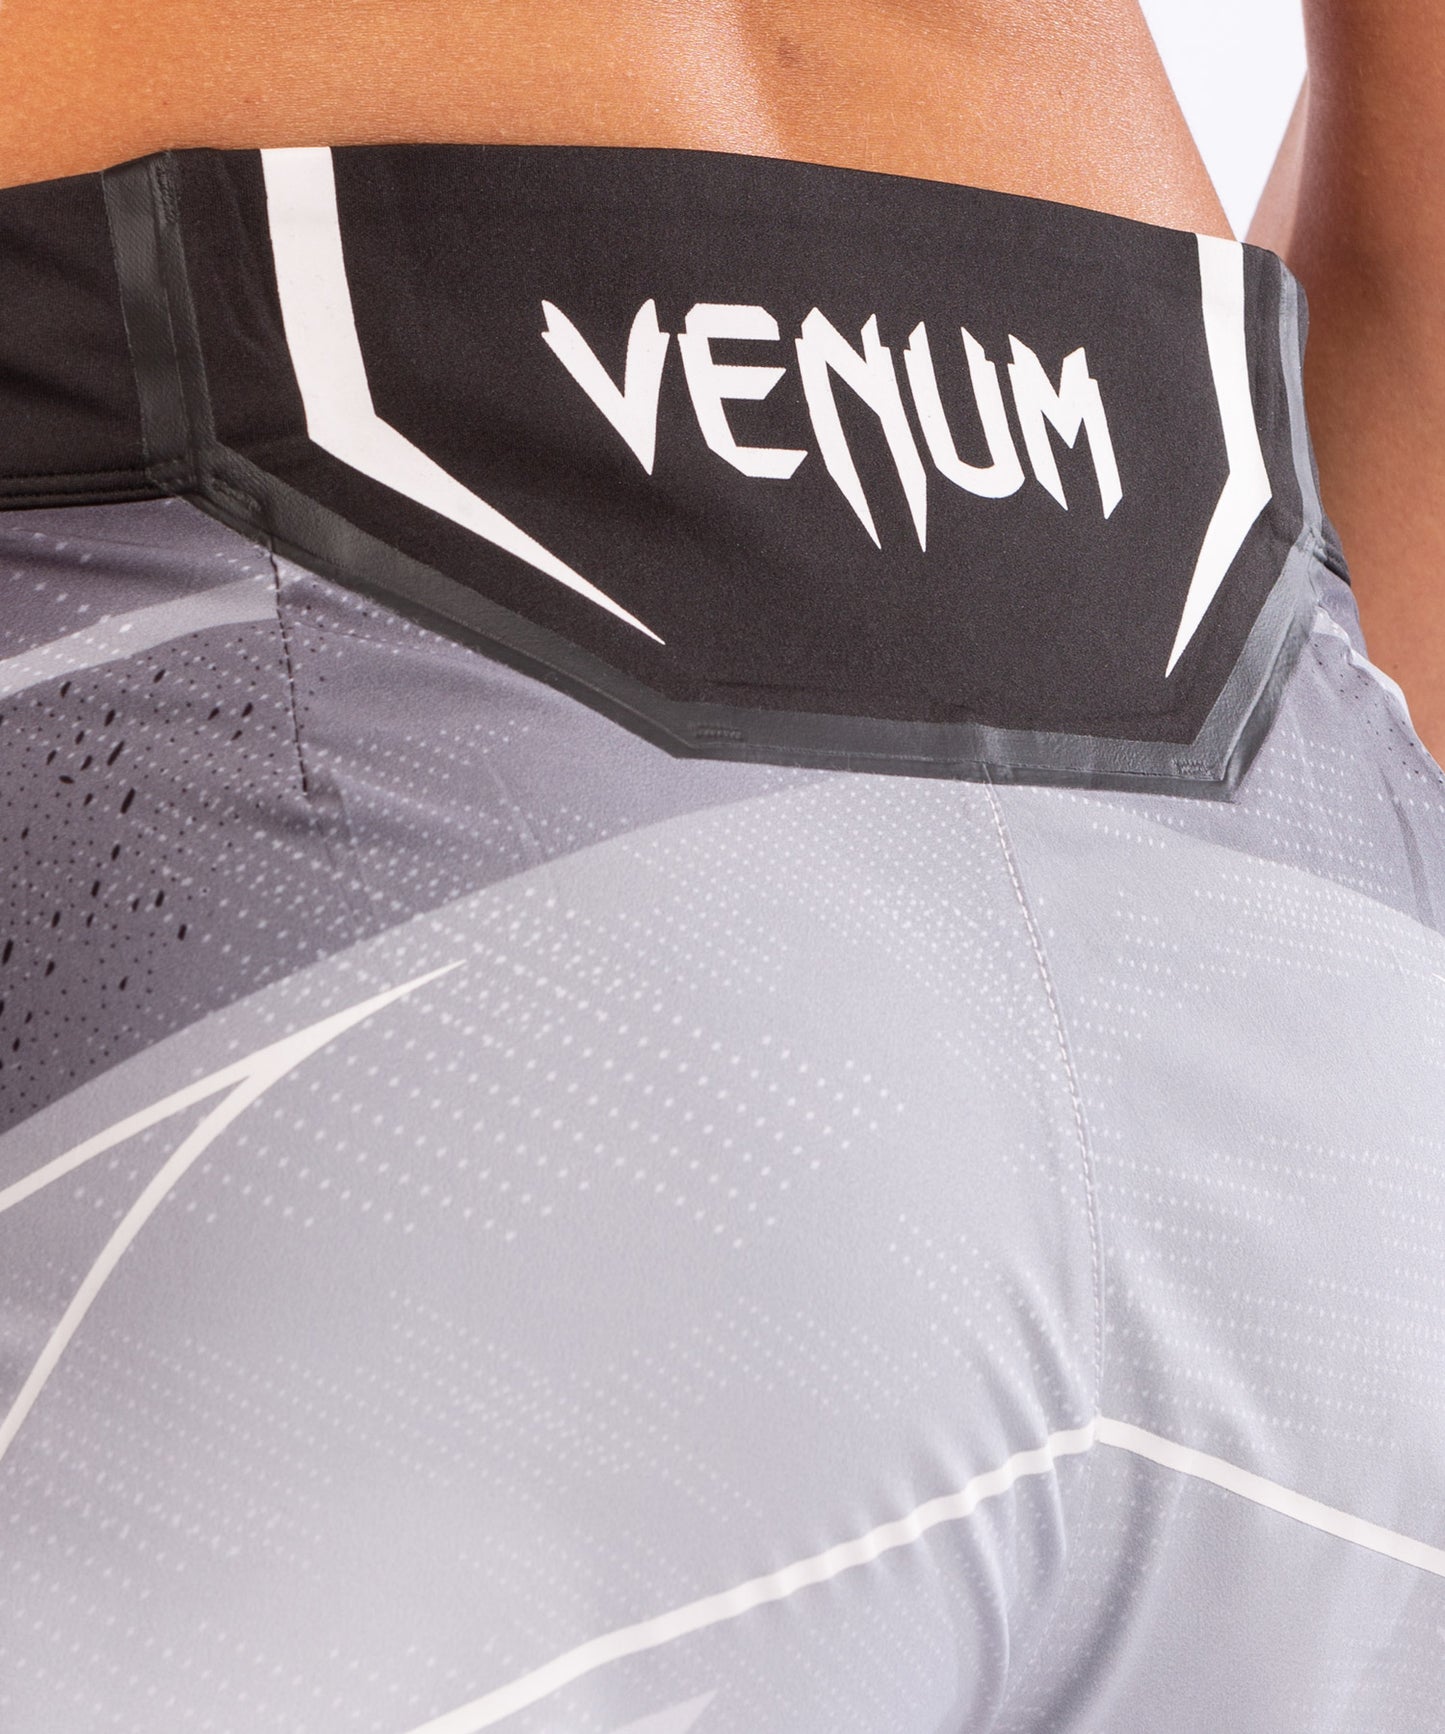 UFC Venum Authentic Fight Night Women's Shorts - Short Fit - White